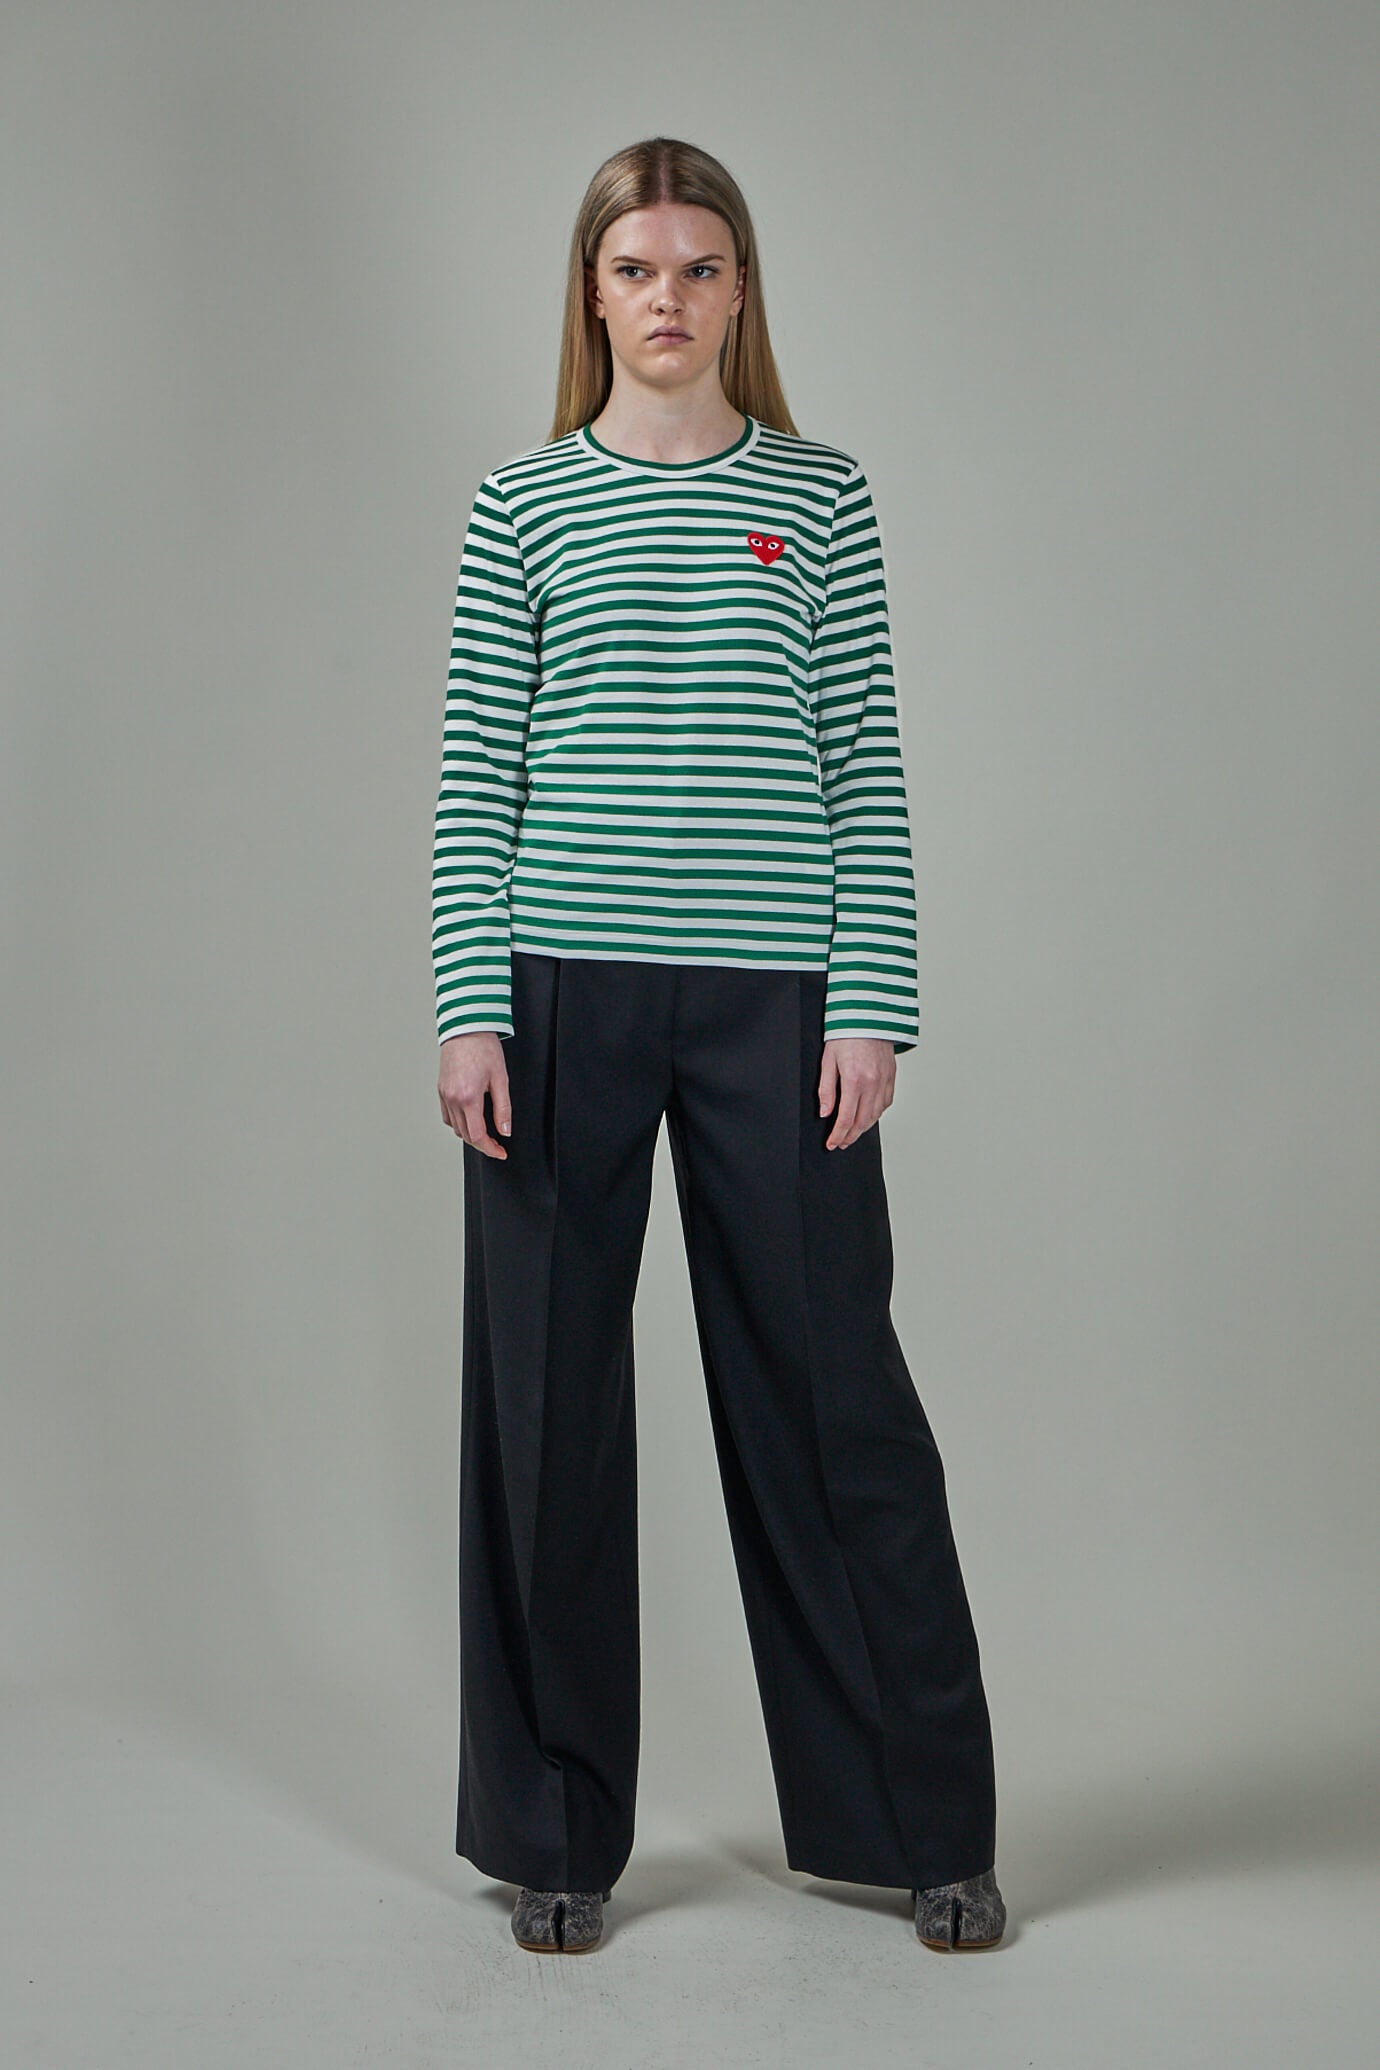 Ladies T-Shirt Knit green white Stripes